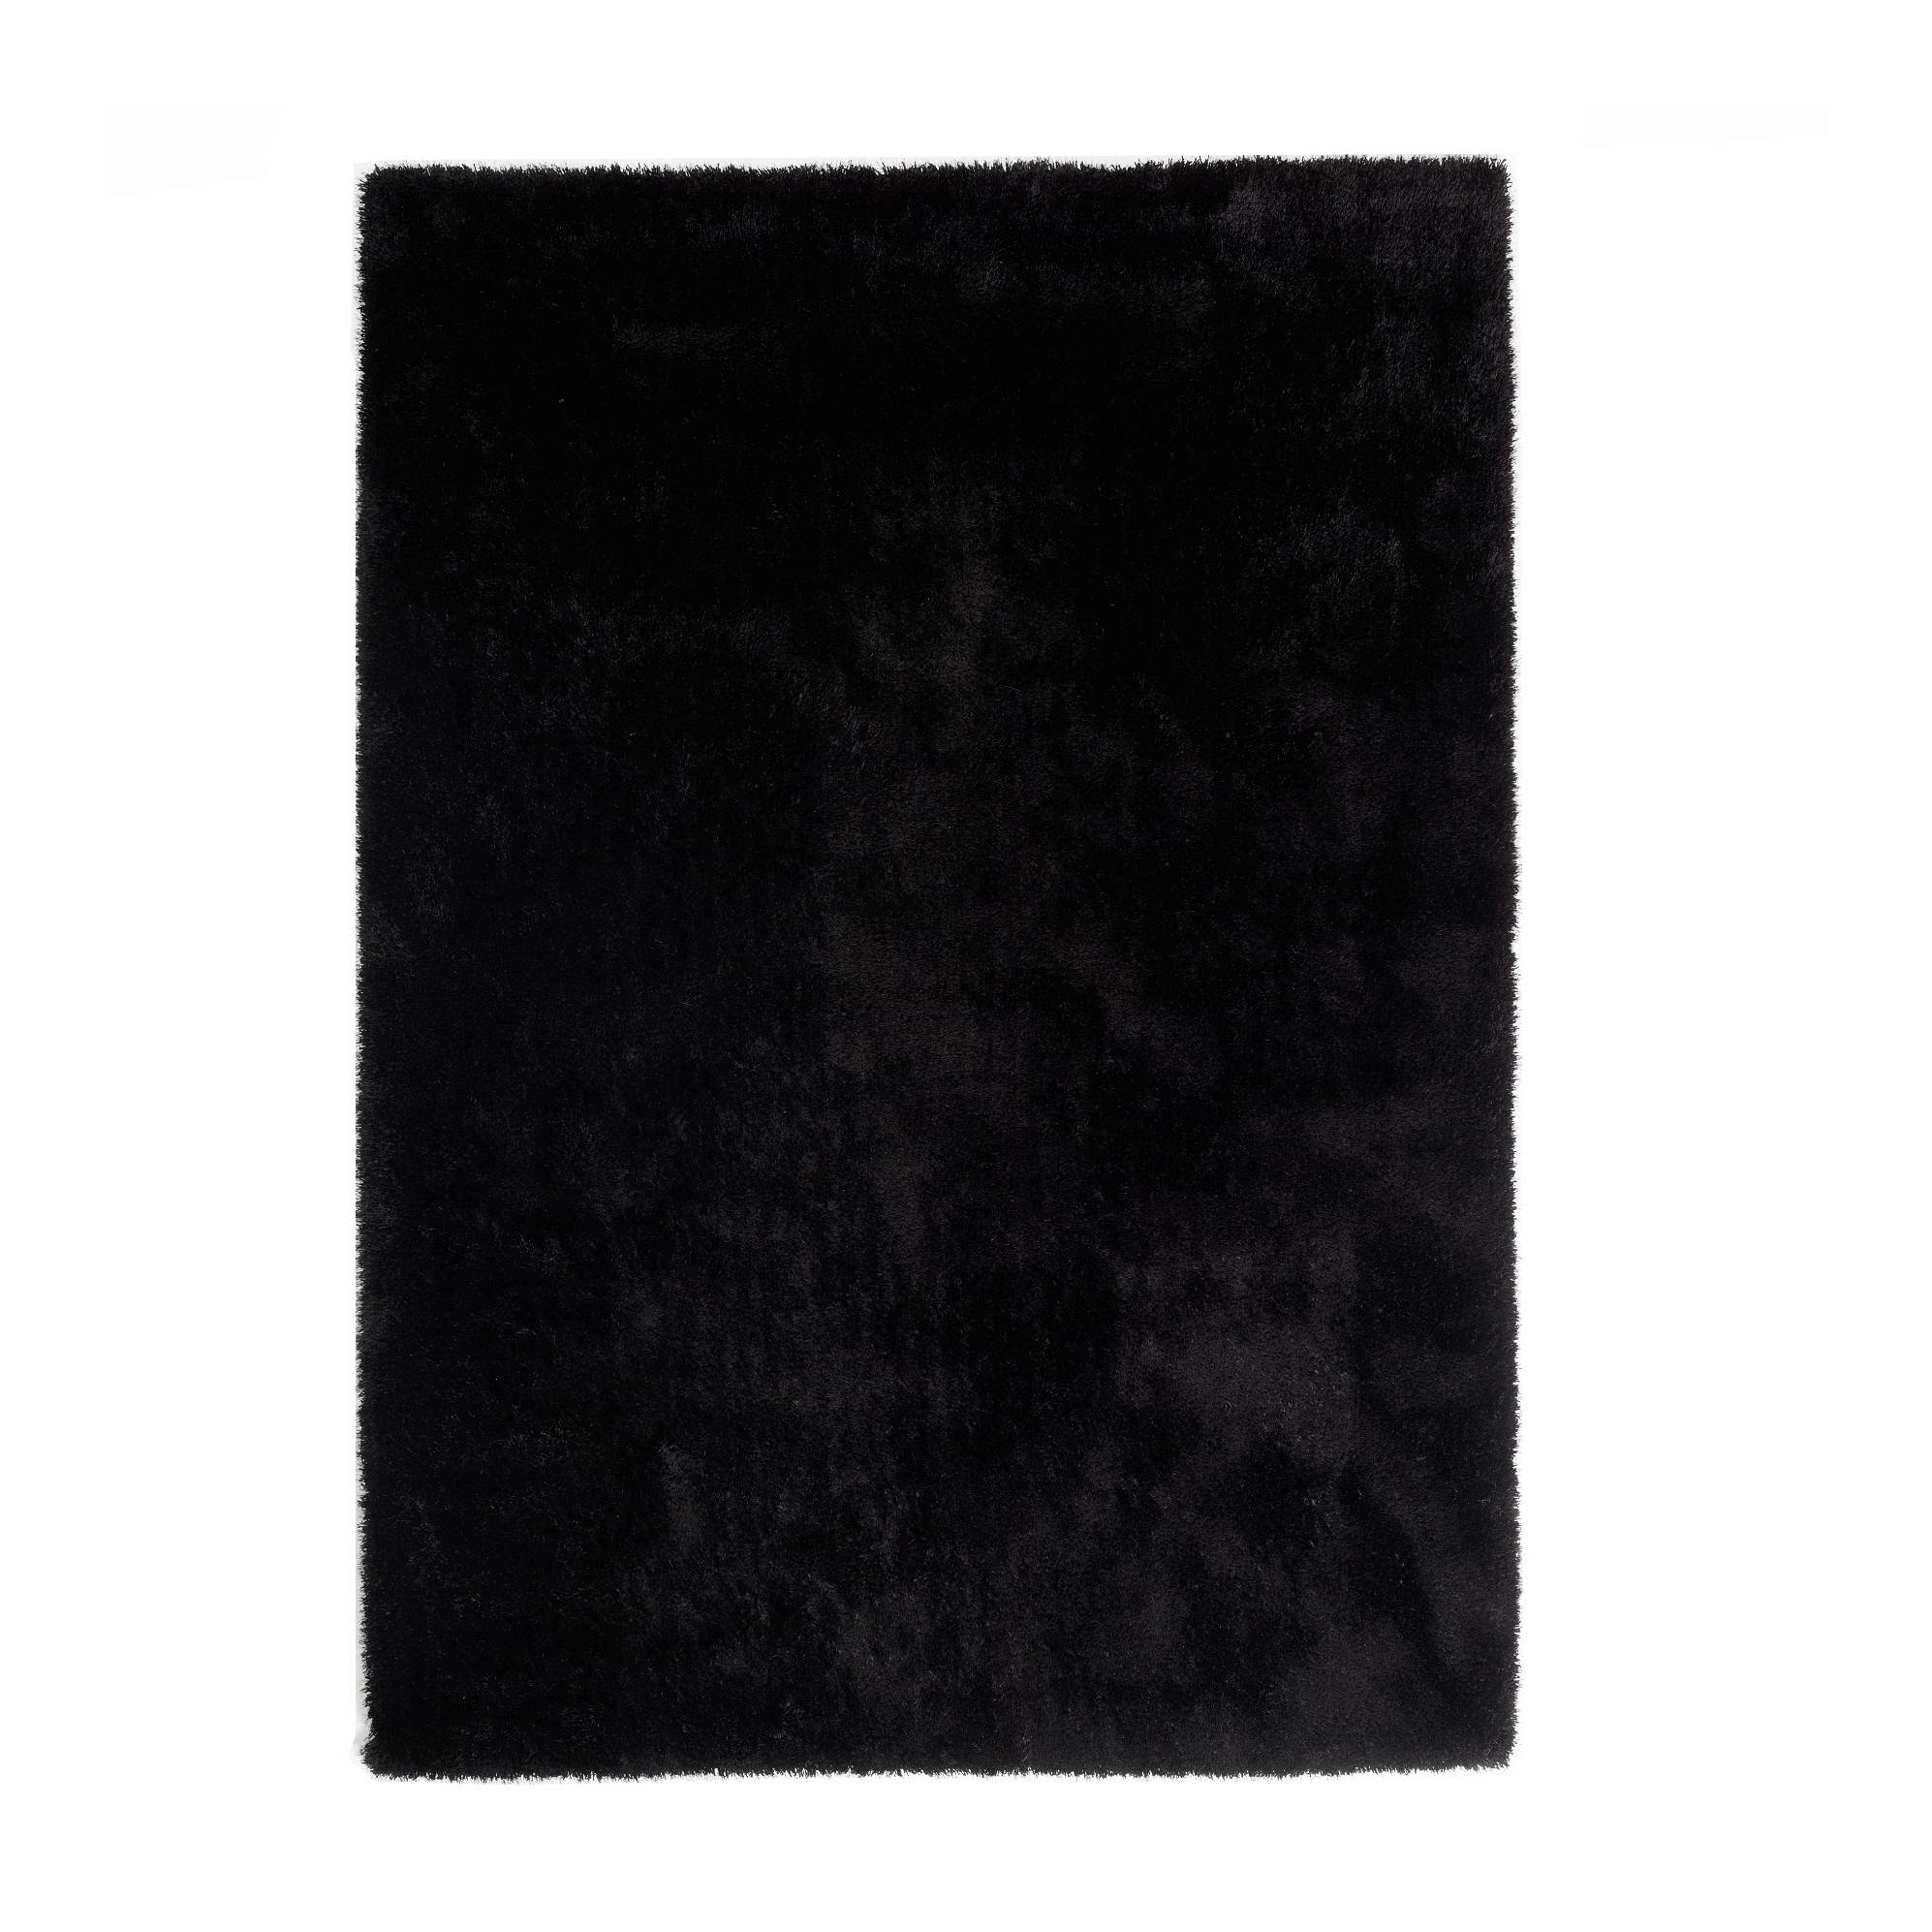 Teppich Black - Schwarz - 70 x 140 cm, Colourcourage